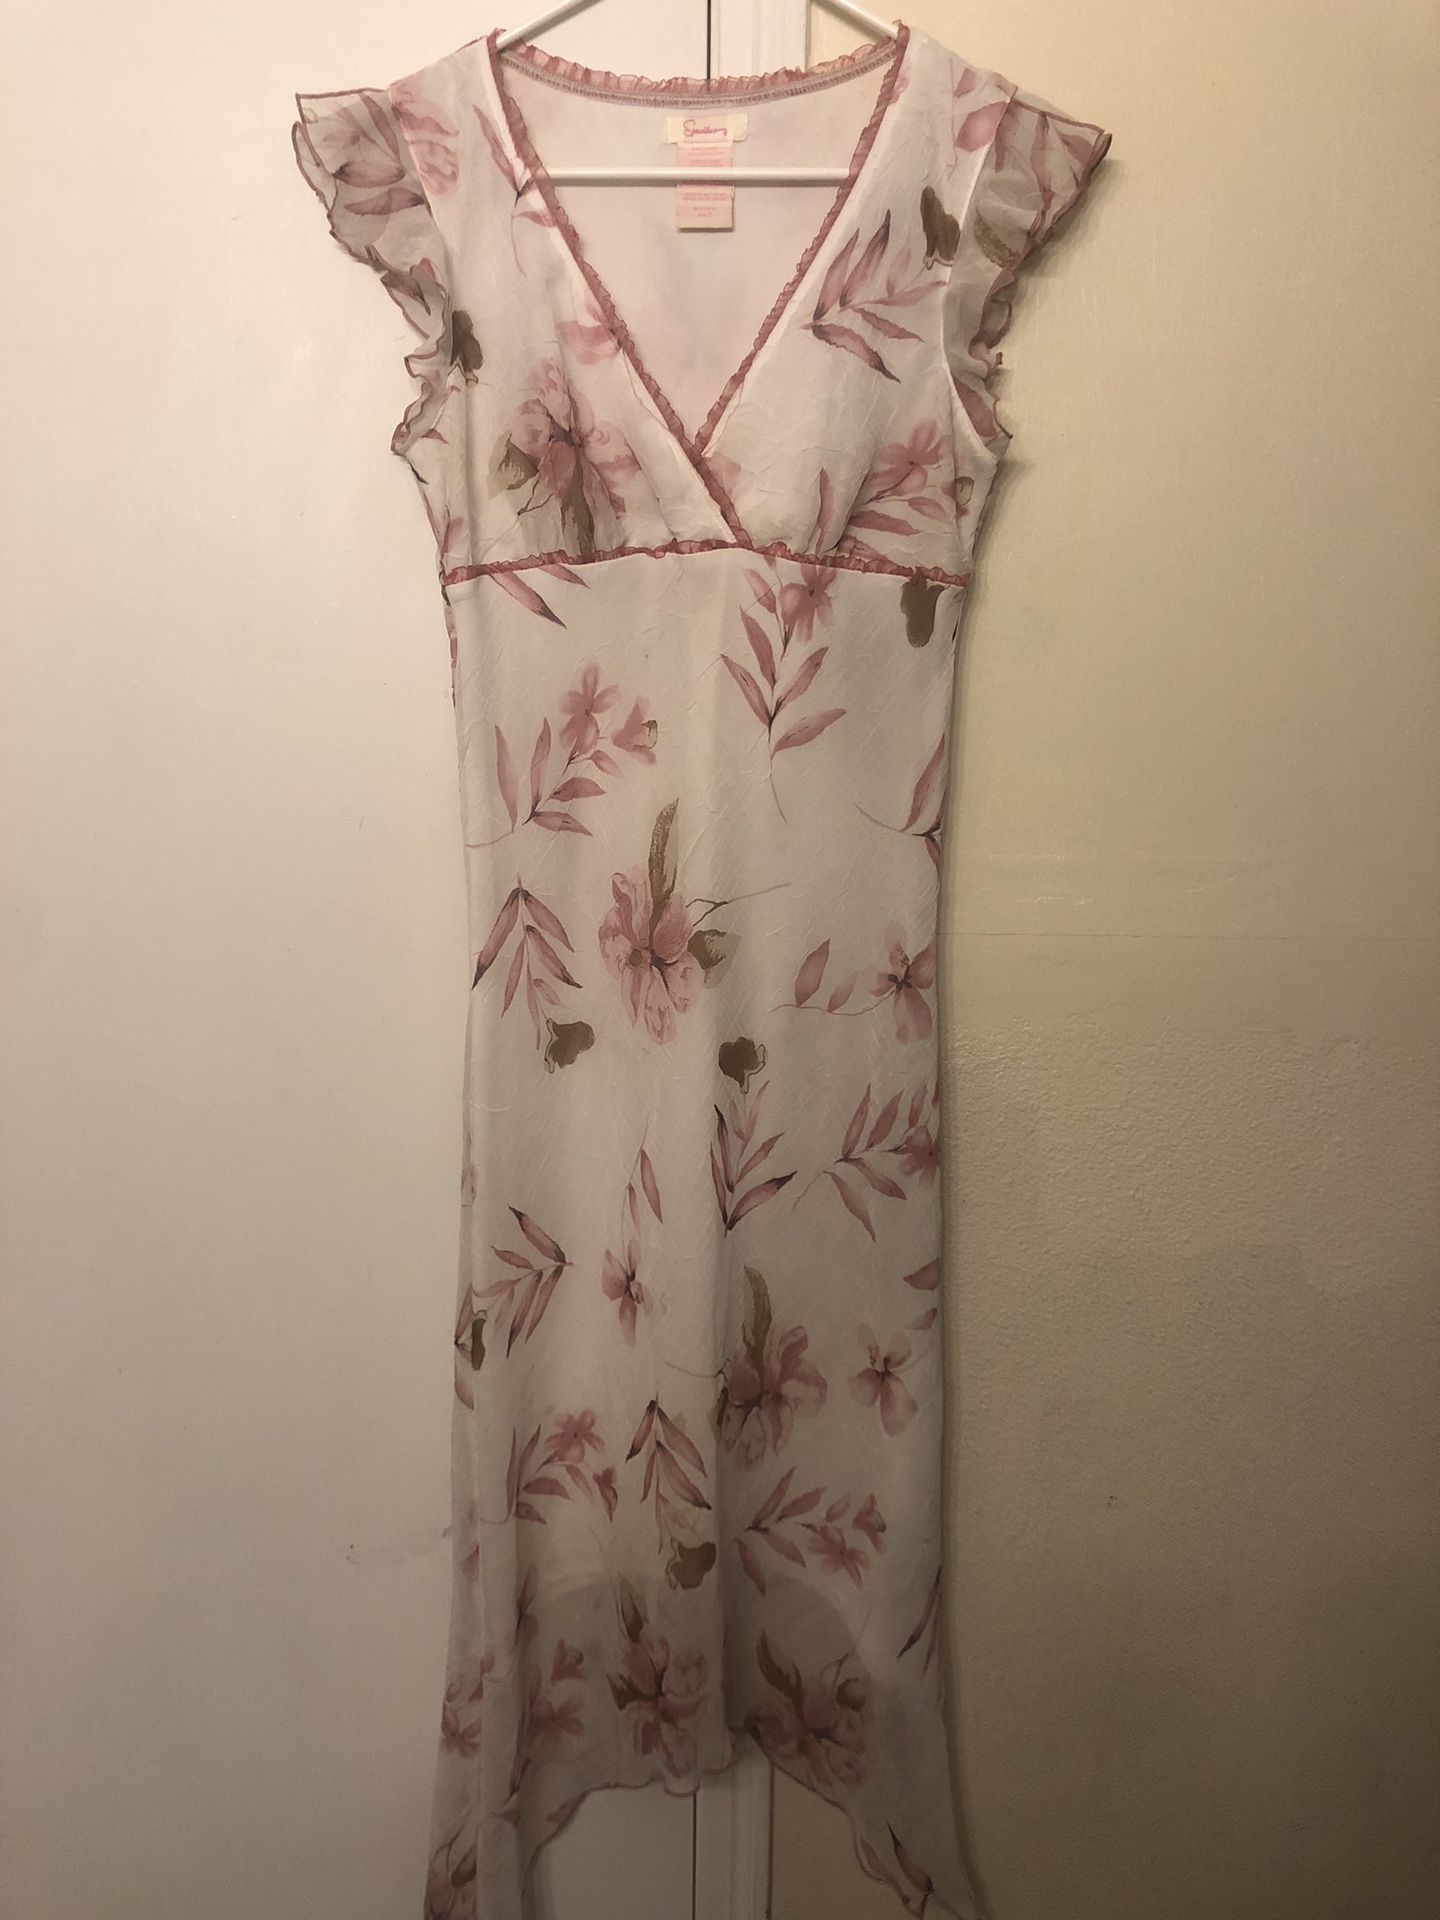 White Floral Dress size 5